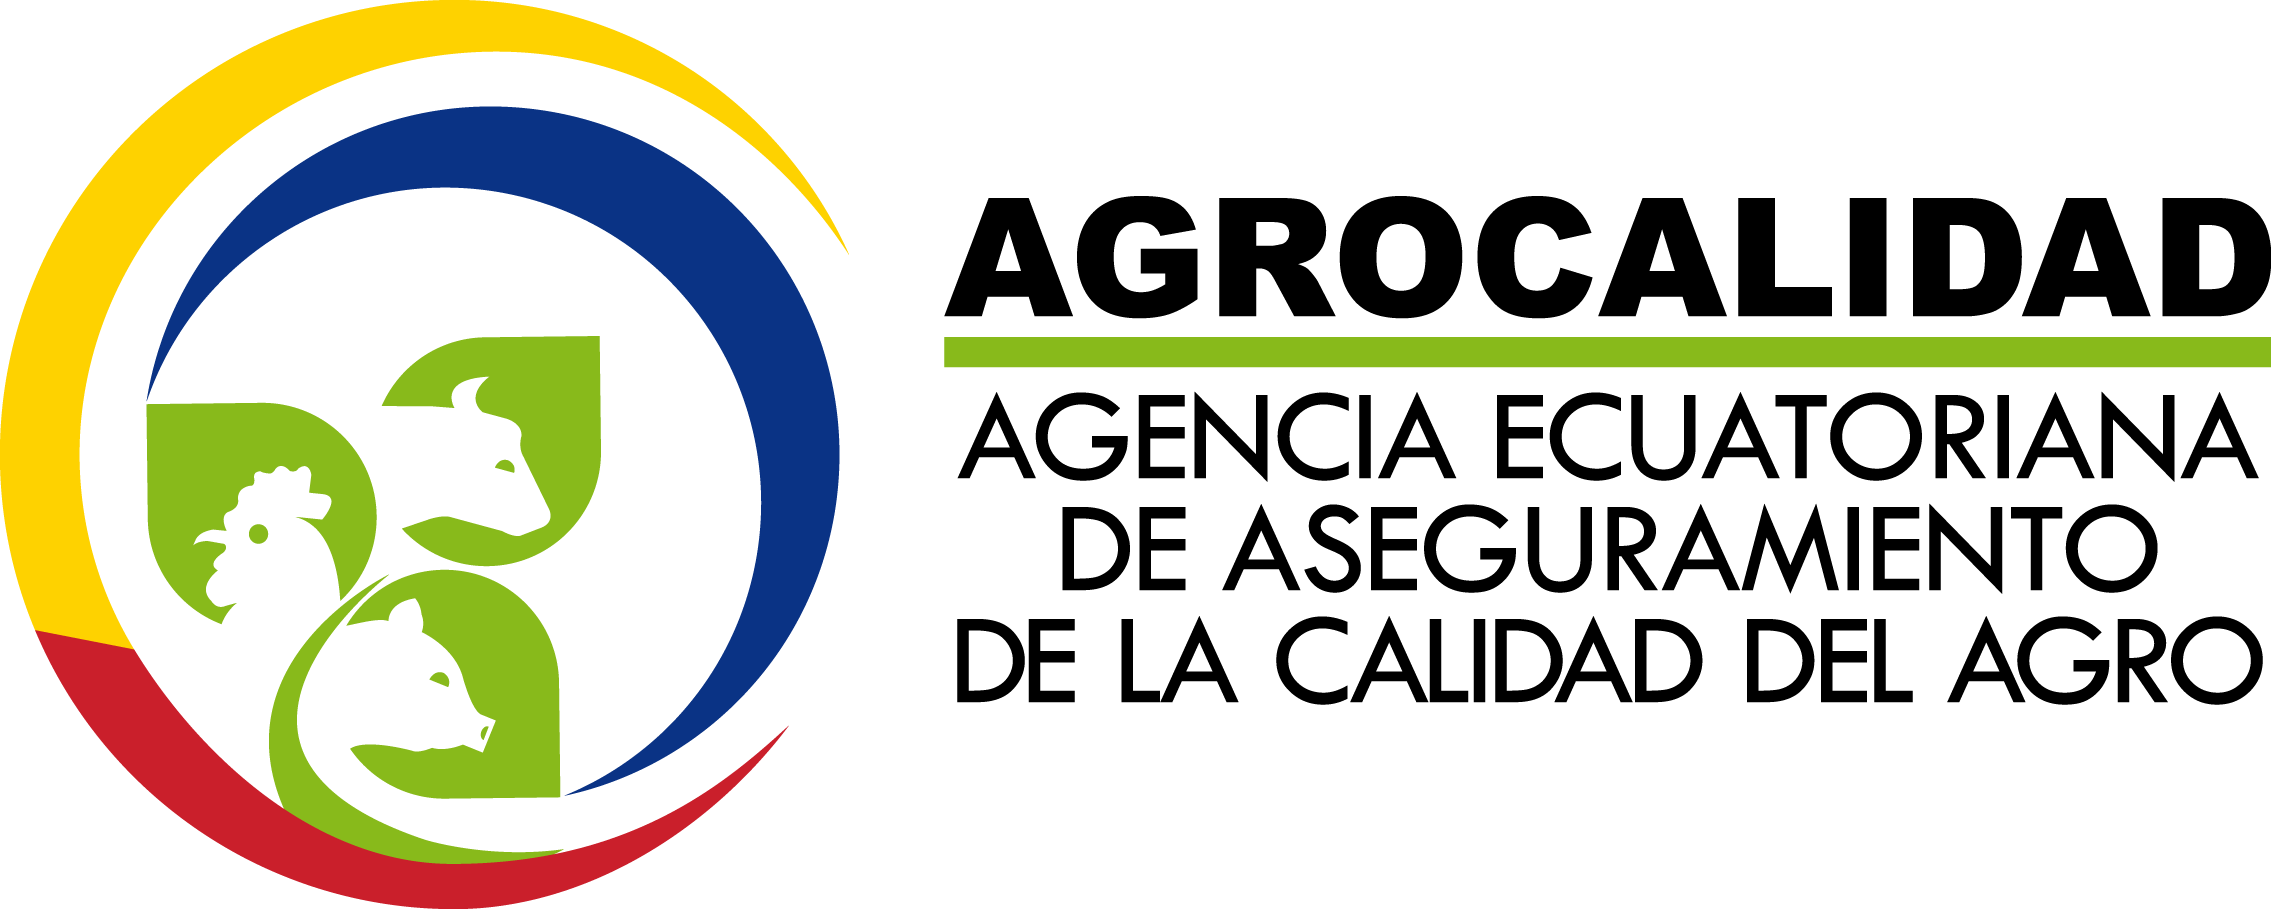 Agrocalidad Logo photo - 1